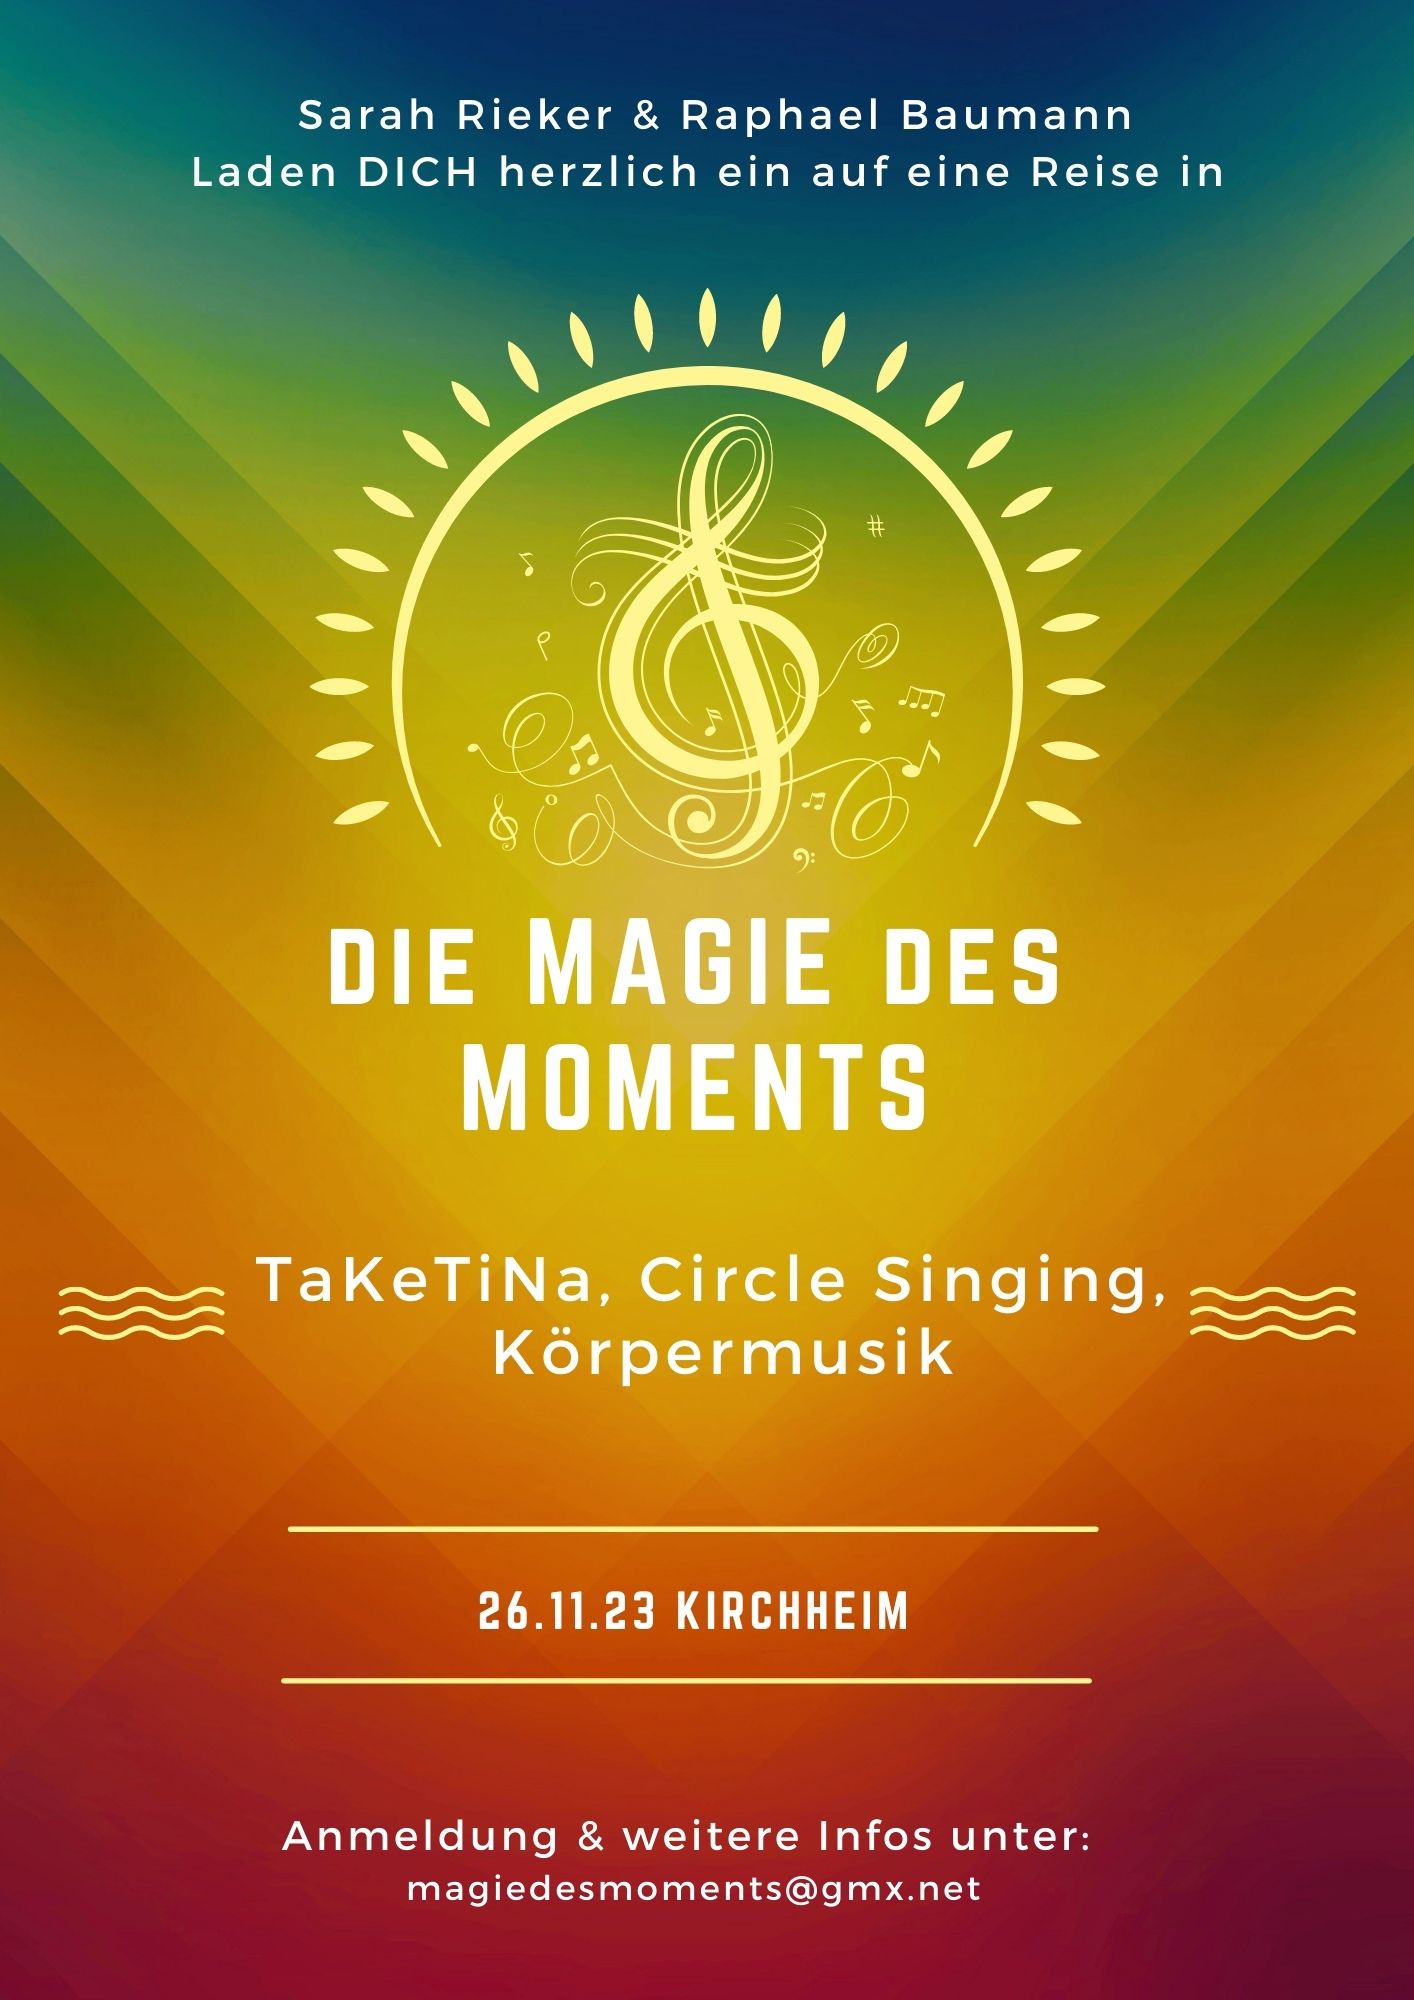 Magie des Moments am 26.11 in Kirchheim